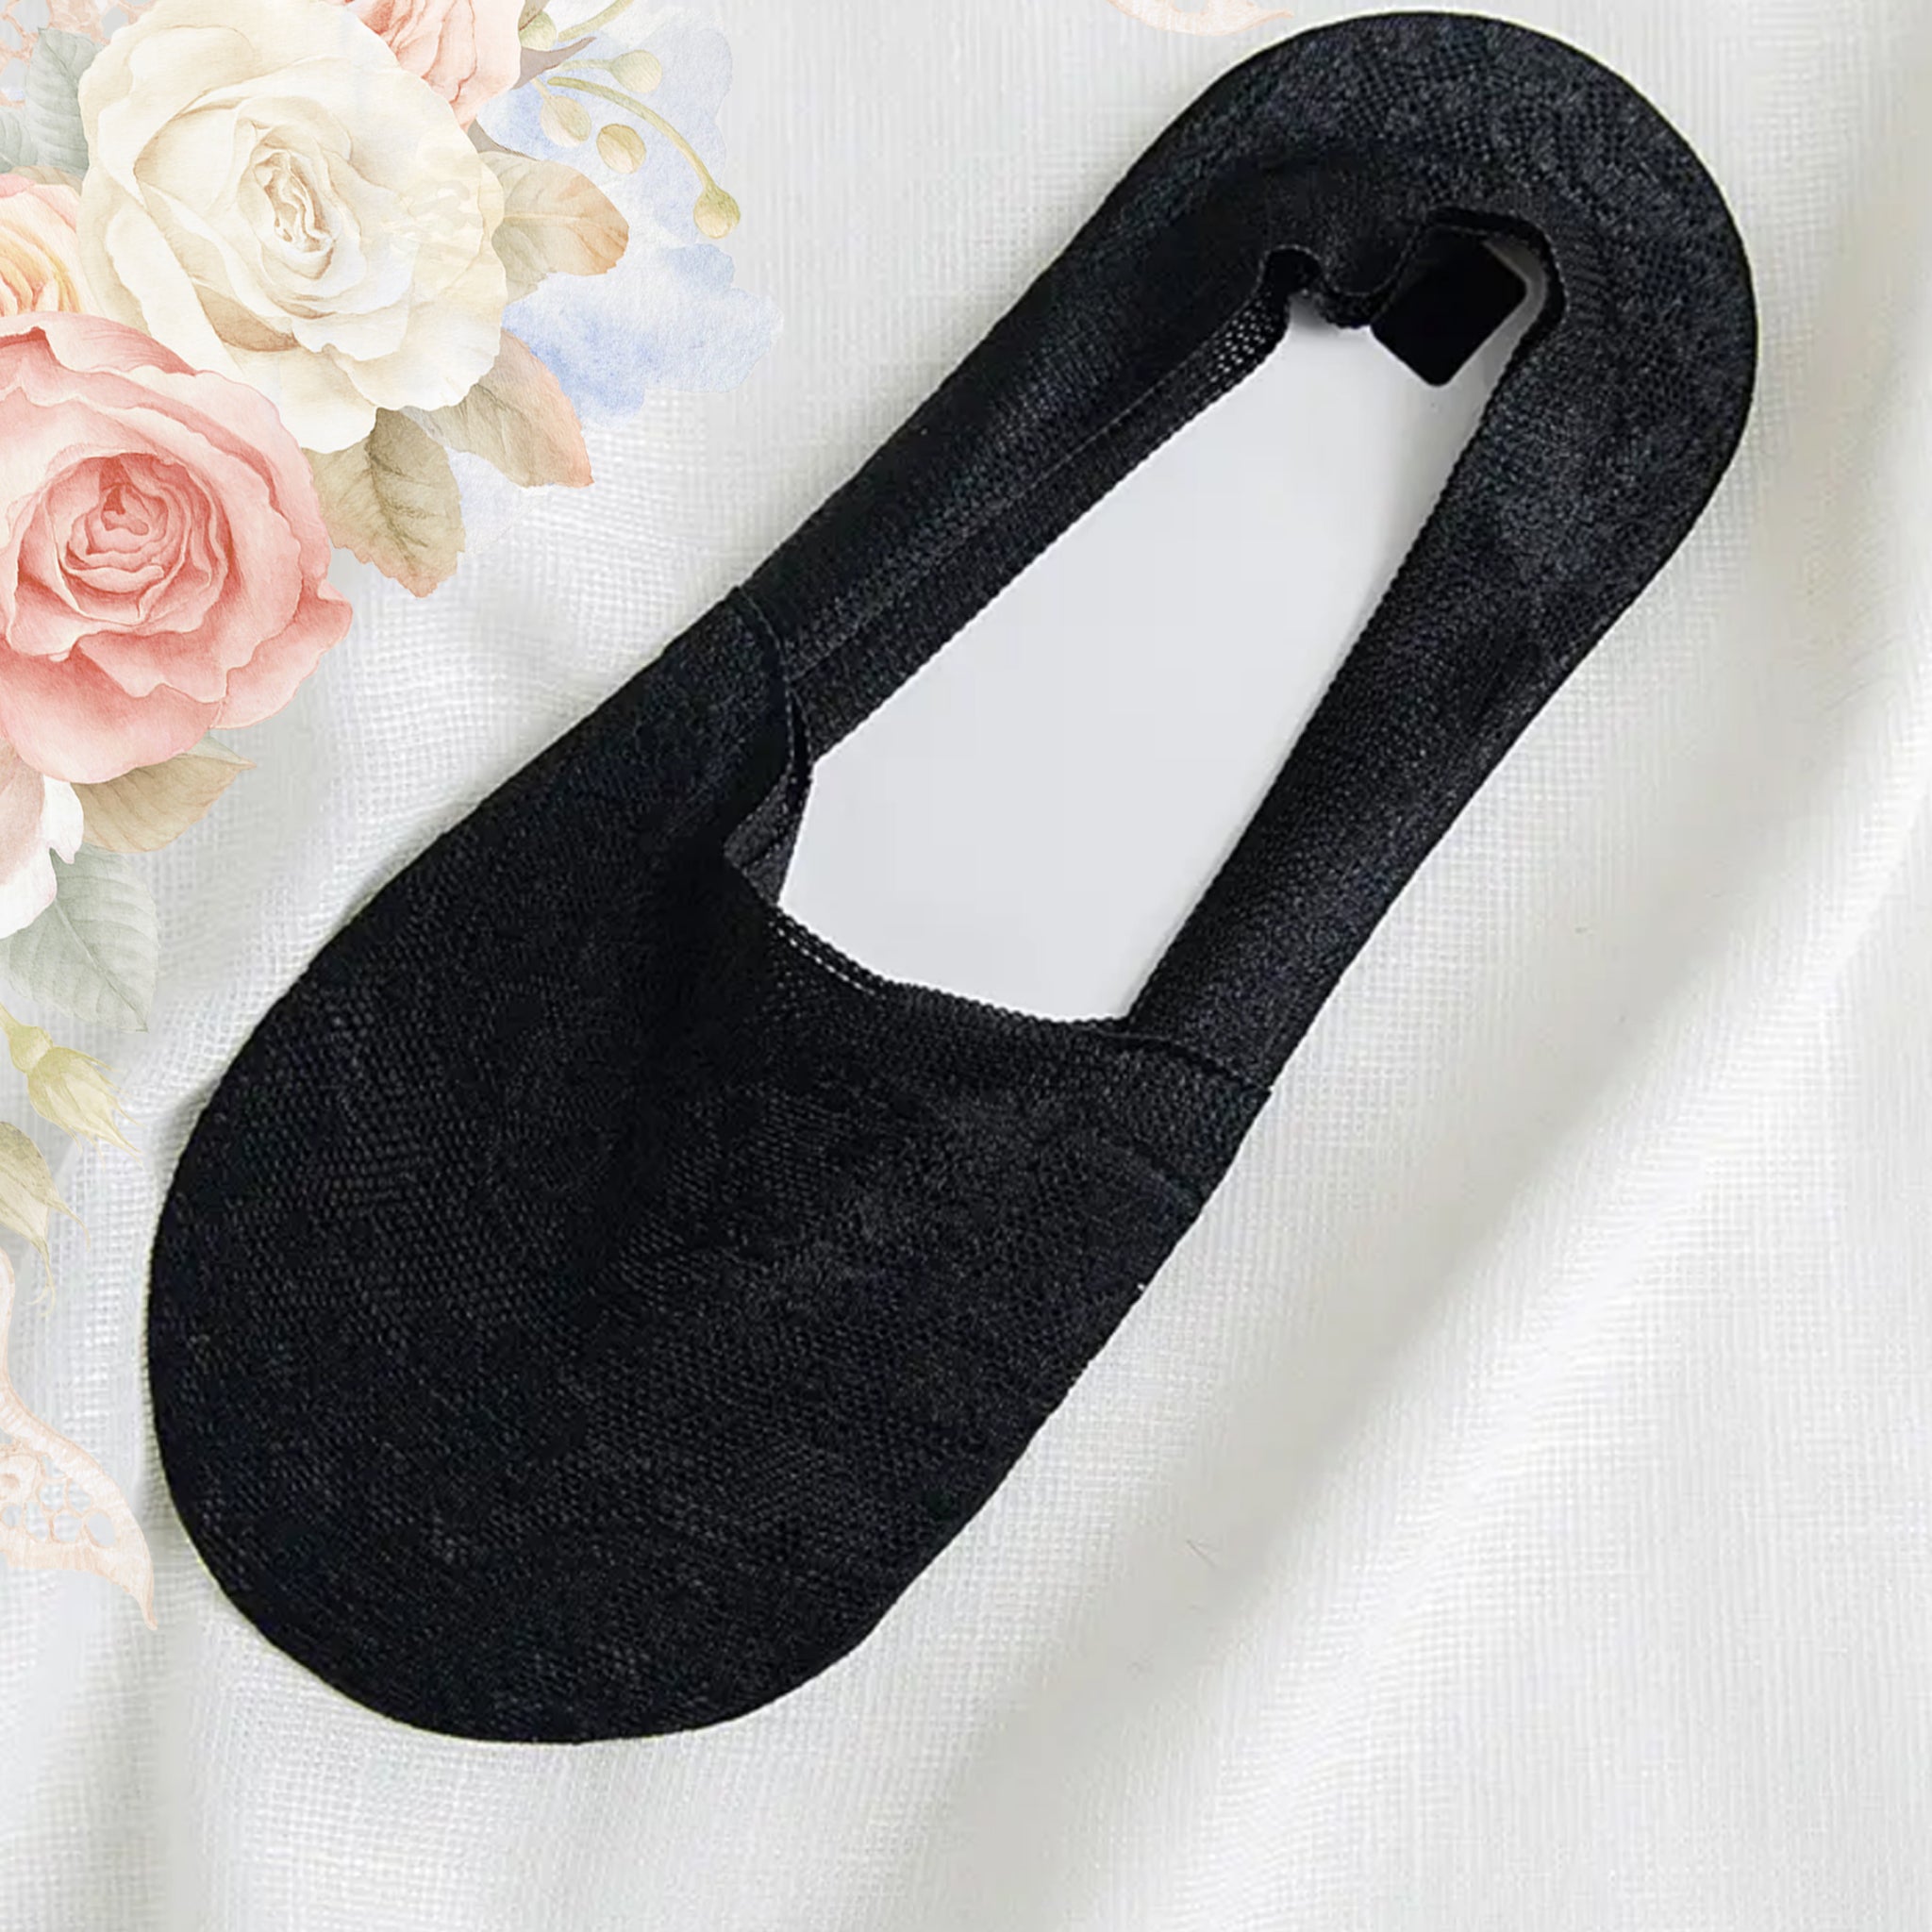 Lace Black Lightweight Socks - No Slip